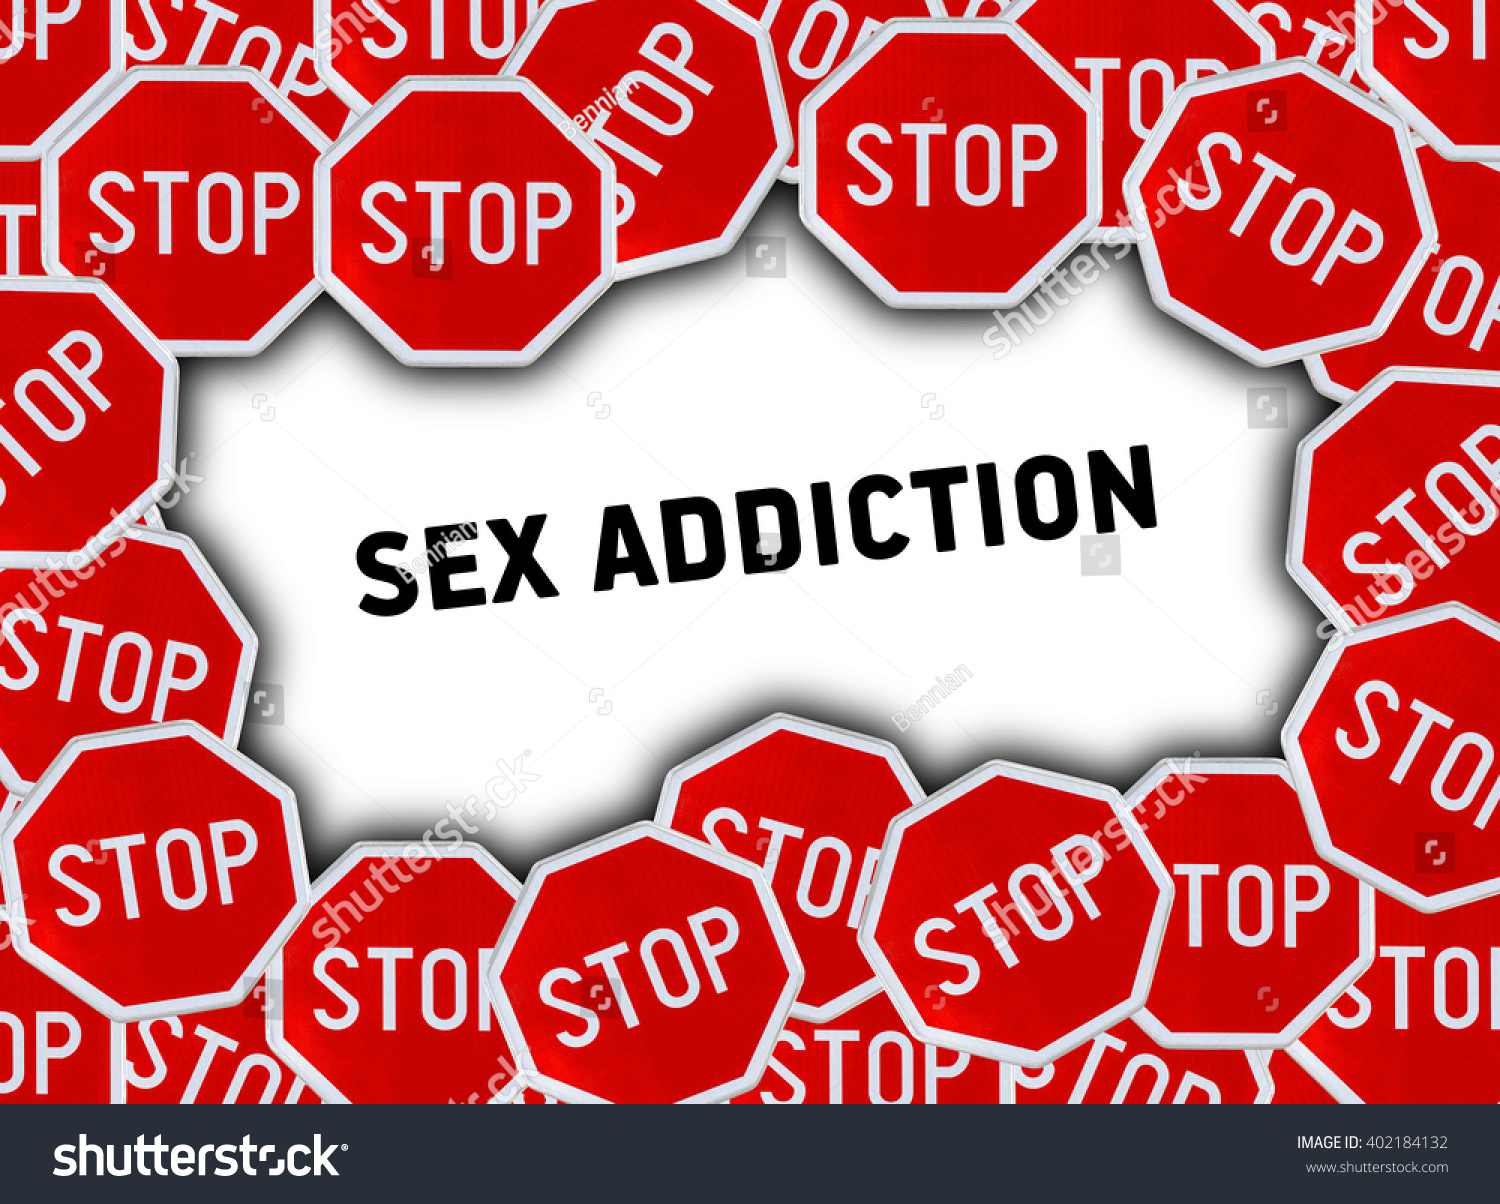 Sign Of Sex Addiction